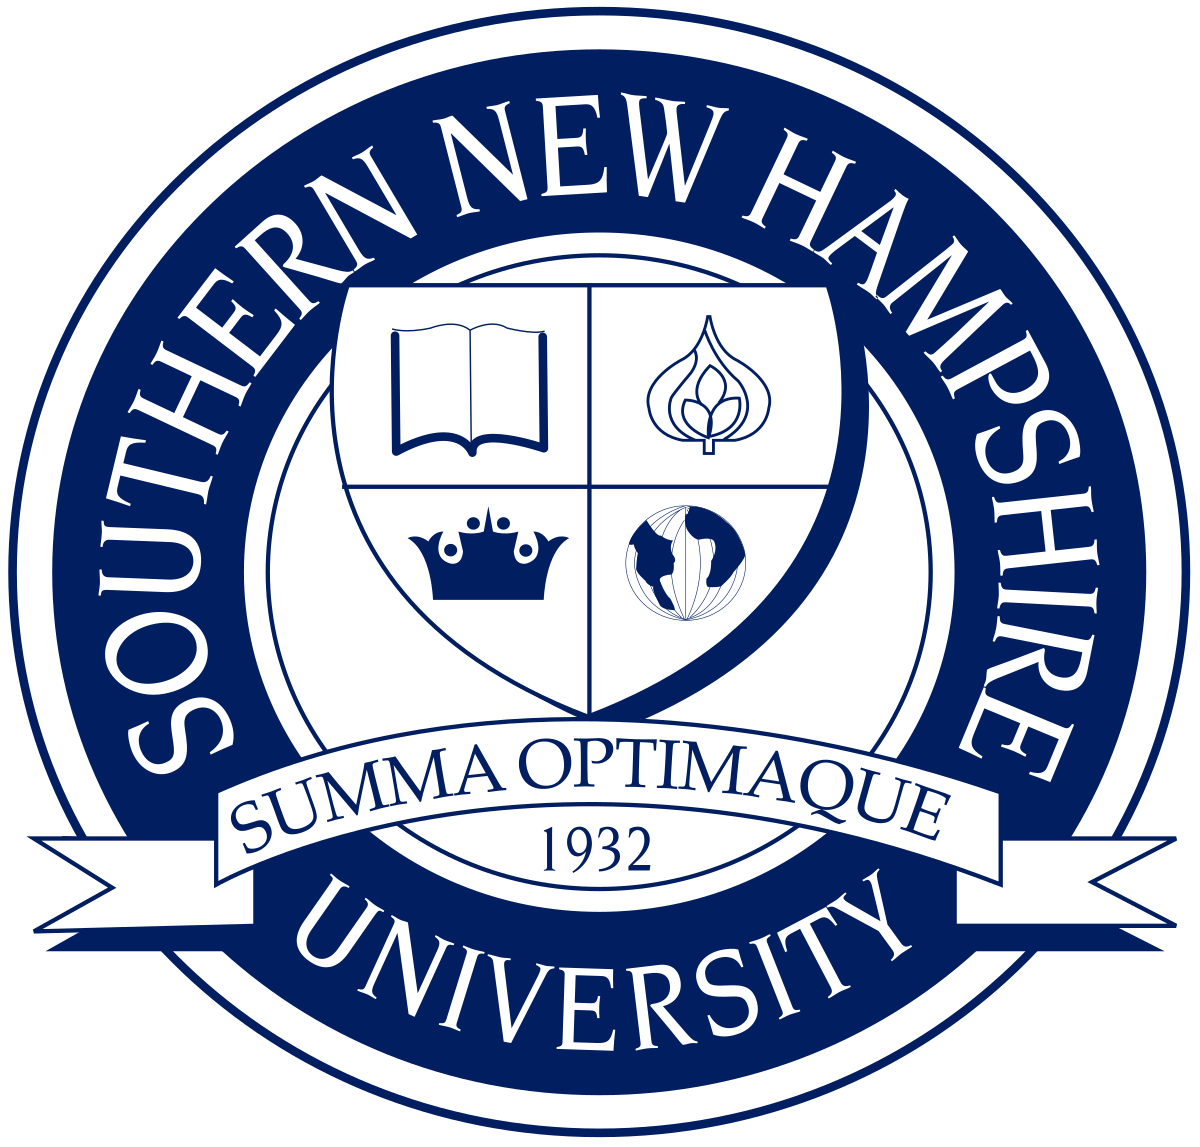 South New Hampshire University